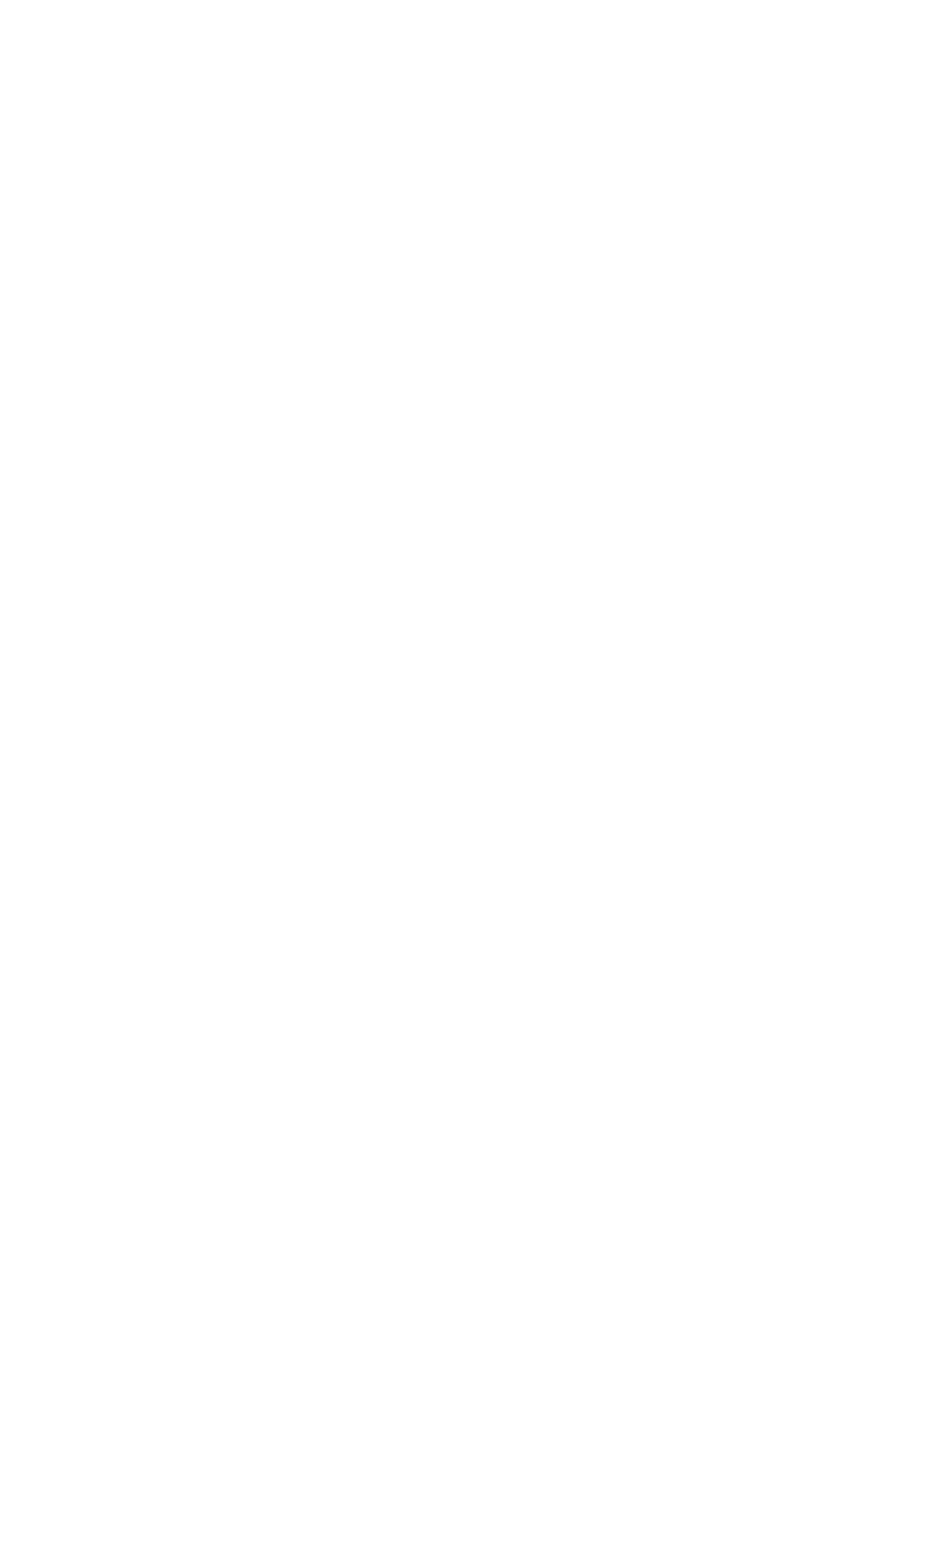 Fertiglobe logo pour fonds sombres (PNG transparent)